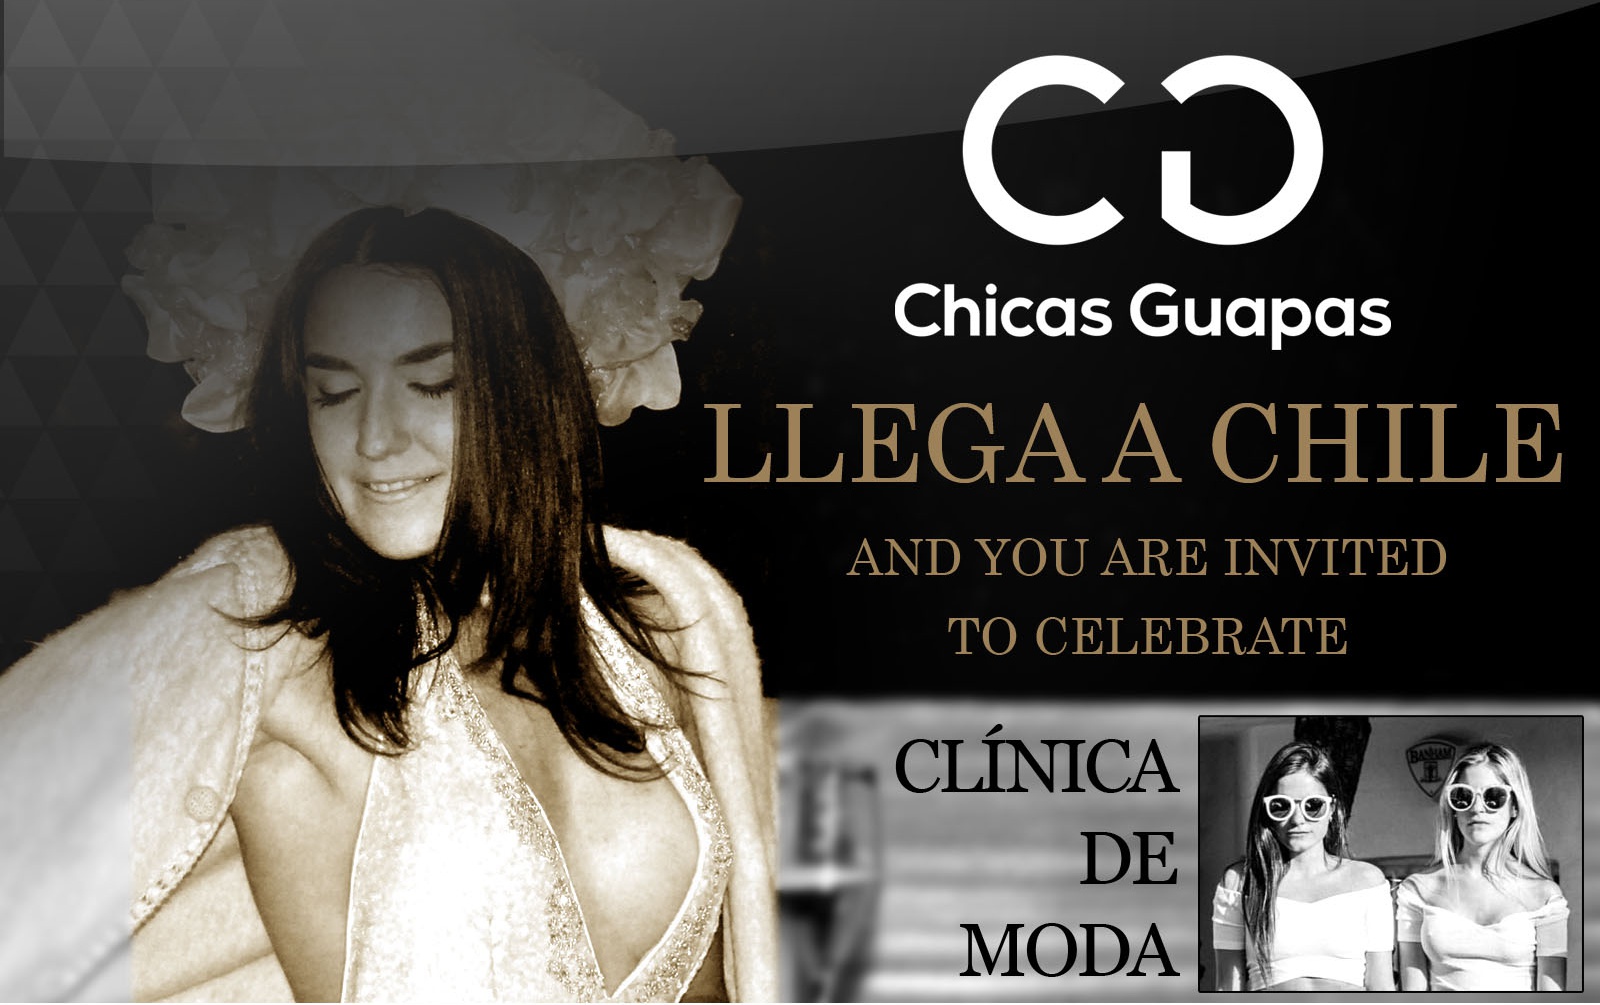 ¡Chicas Guapas llega a Chile! Evento VIP + Clínica de Moda